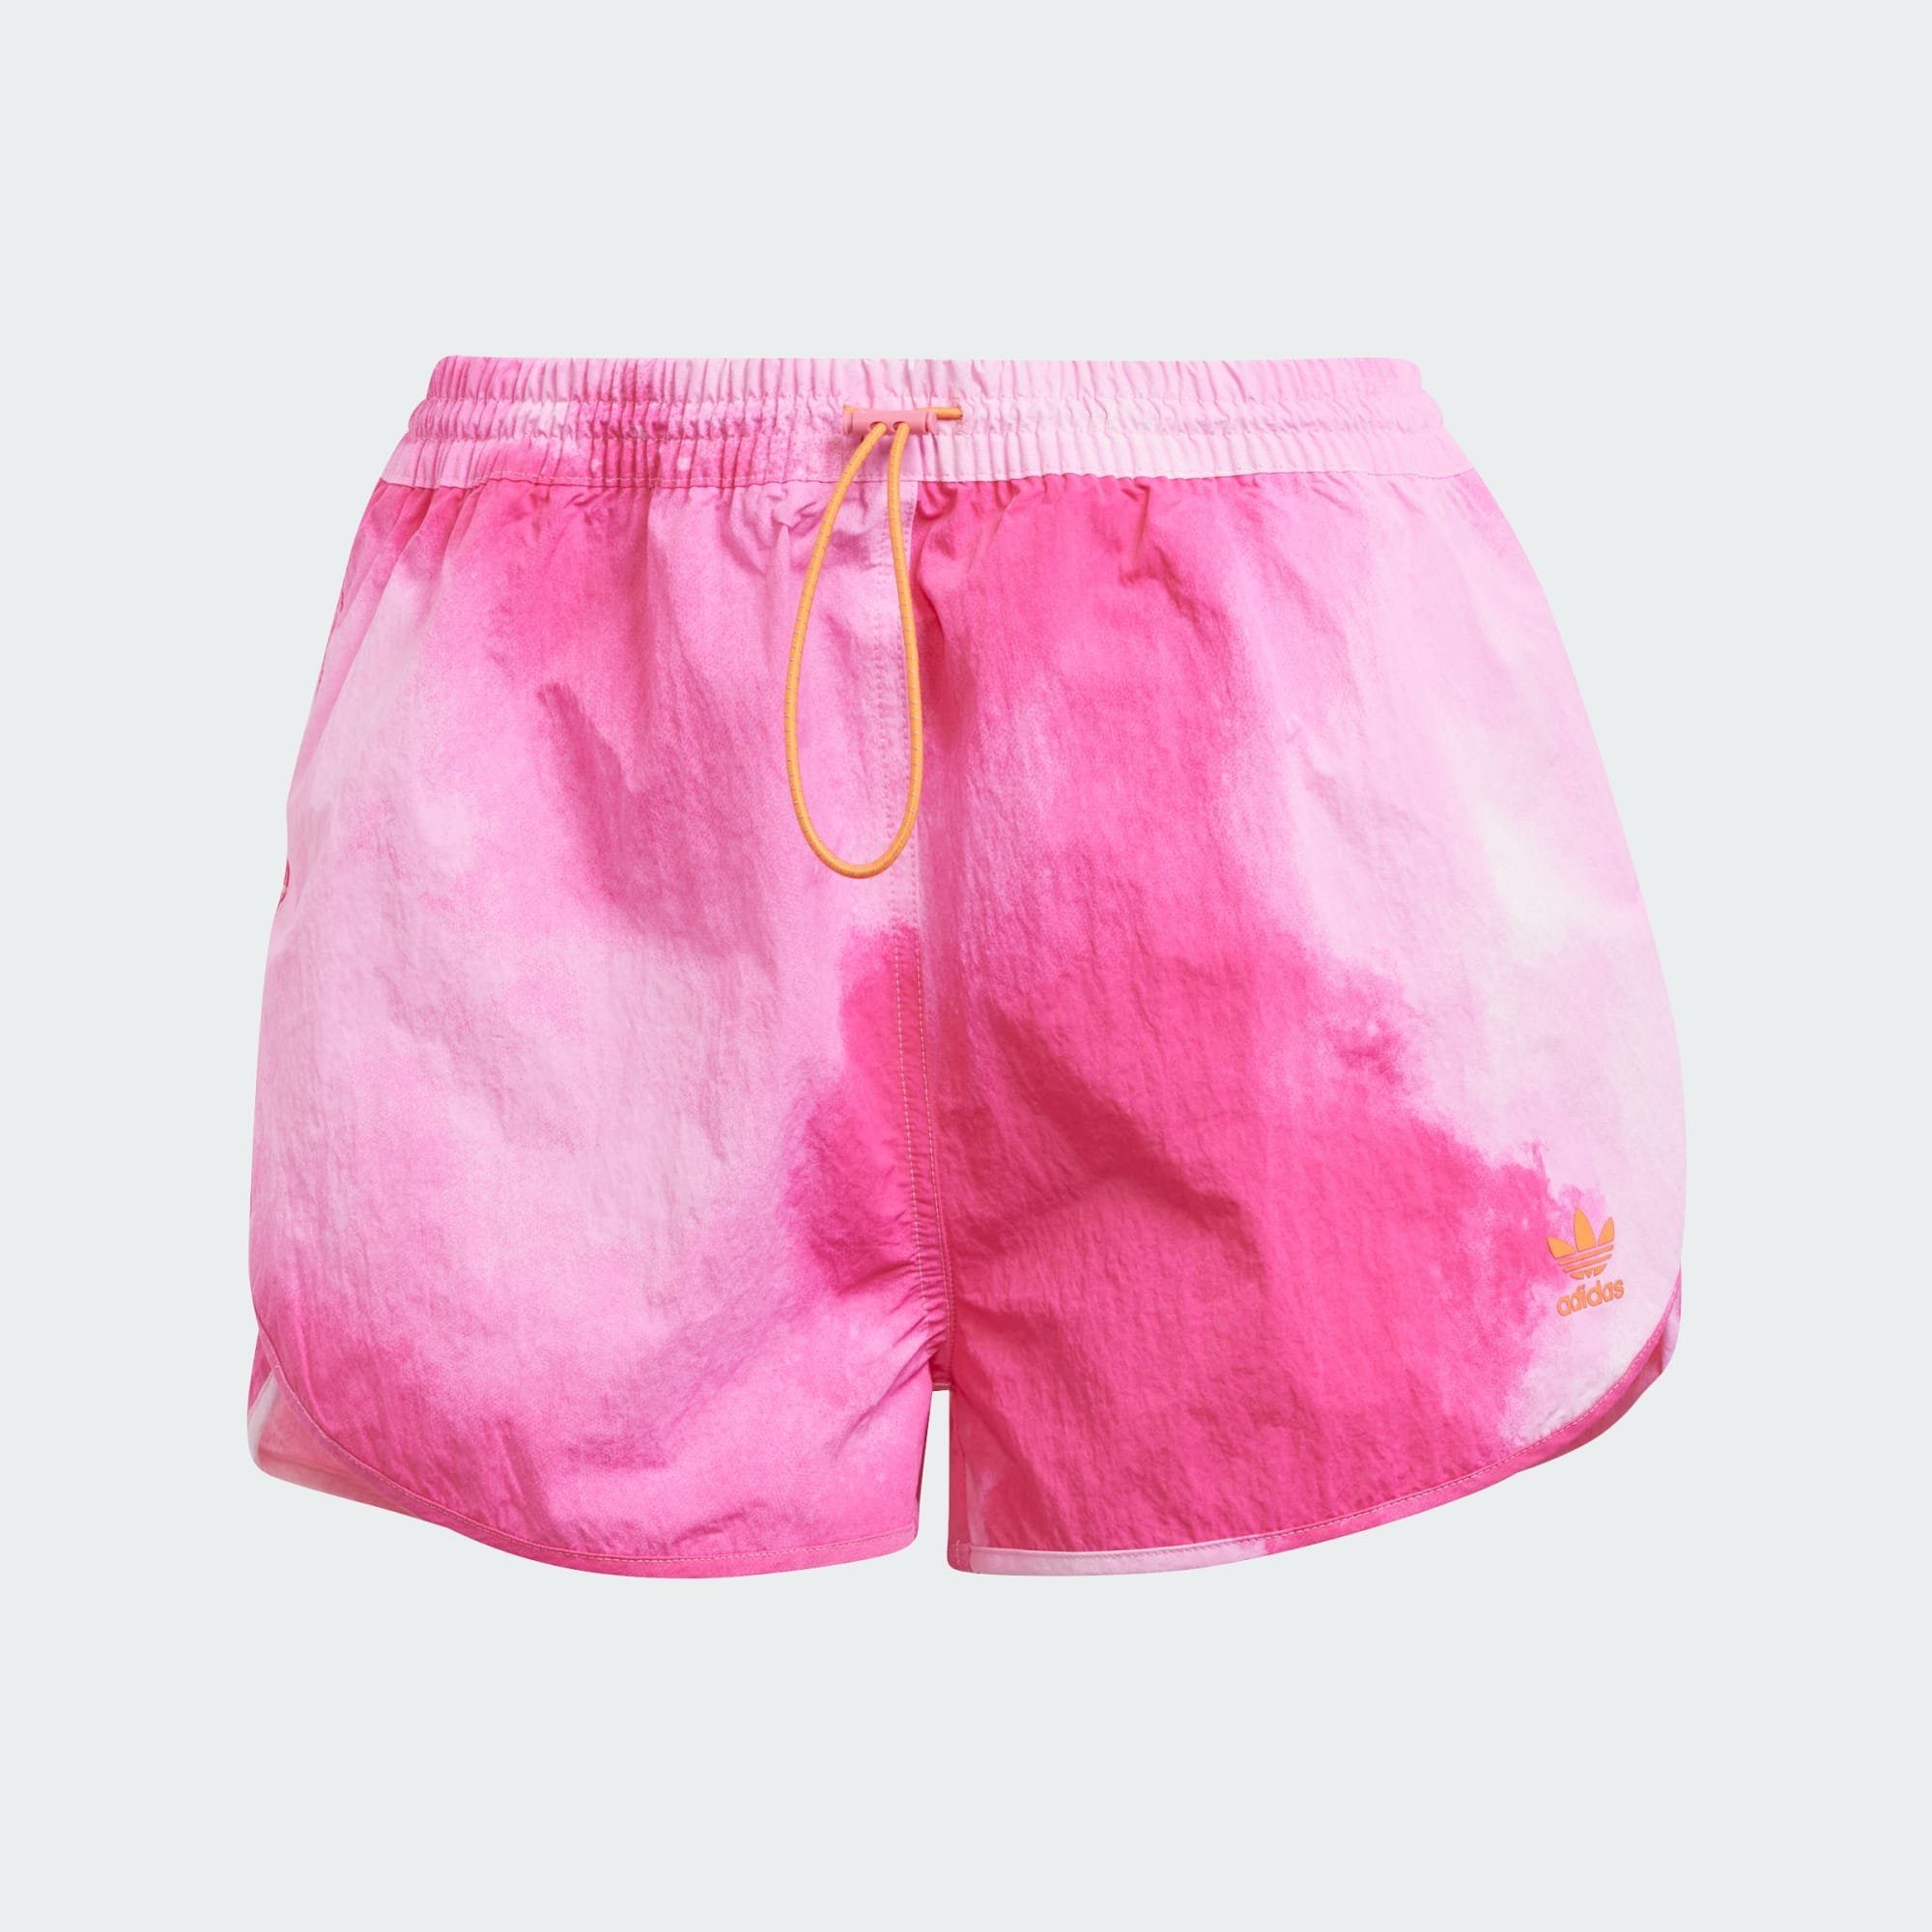 Pink COLOR Multicolor Originals / Shorts SHORTS RUNNER FADE adidas Clear